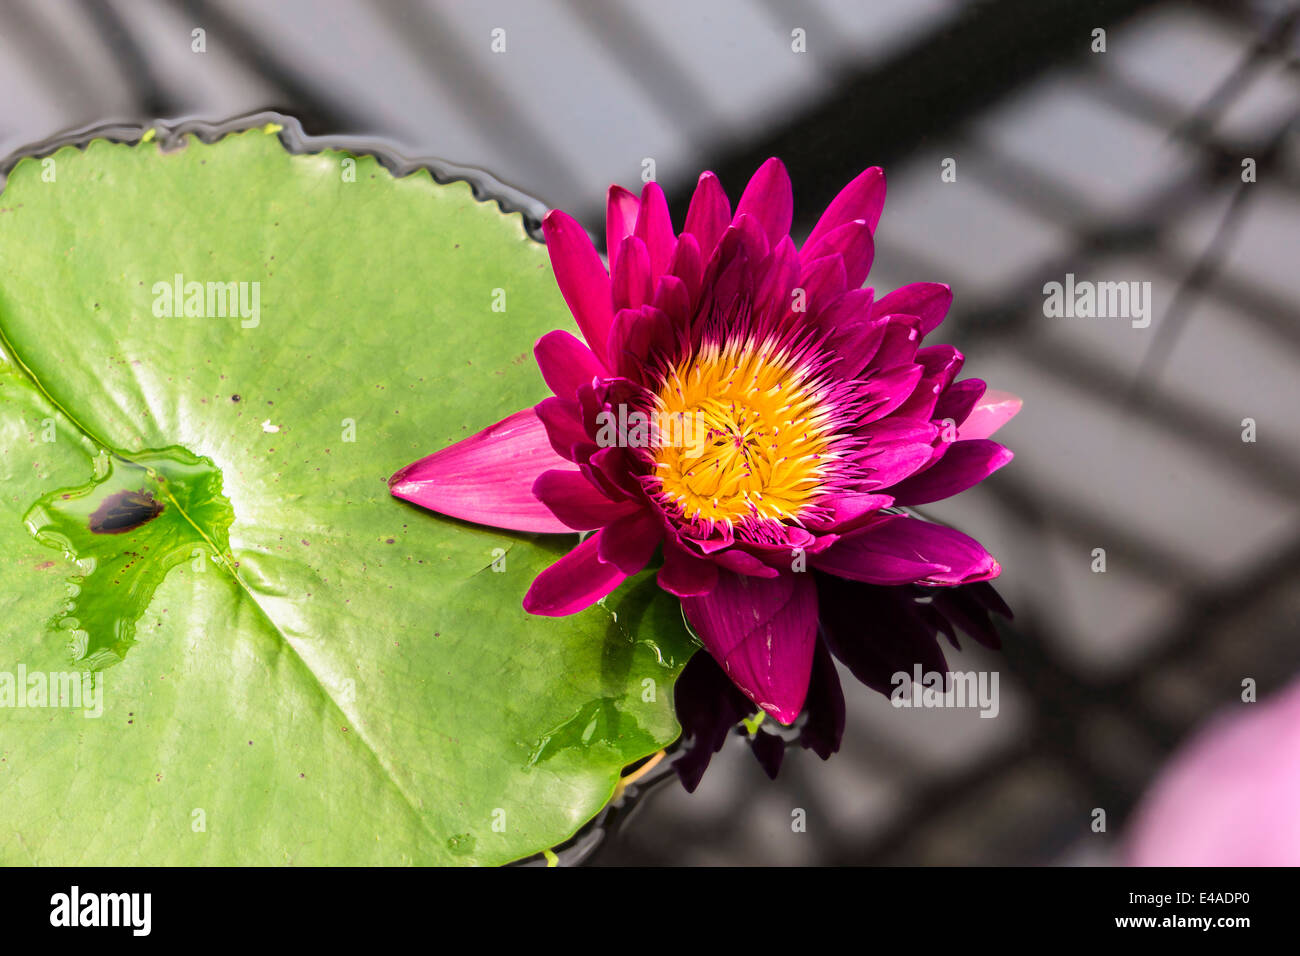 UK, London, Kew, Royal Botanic Gardens, Kew Gardens, pink water lily and lily pad Stock Photo